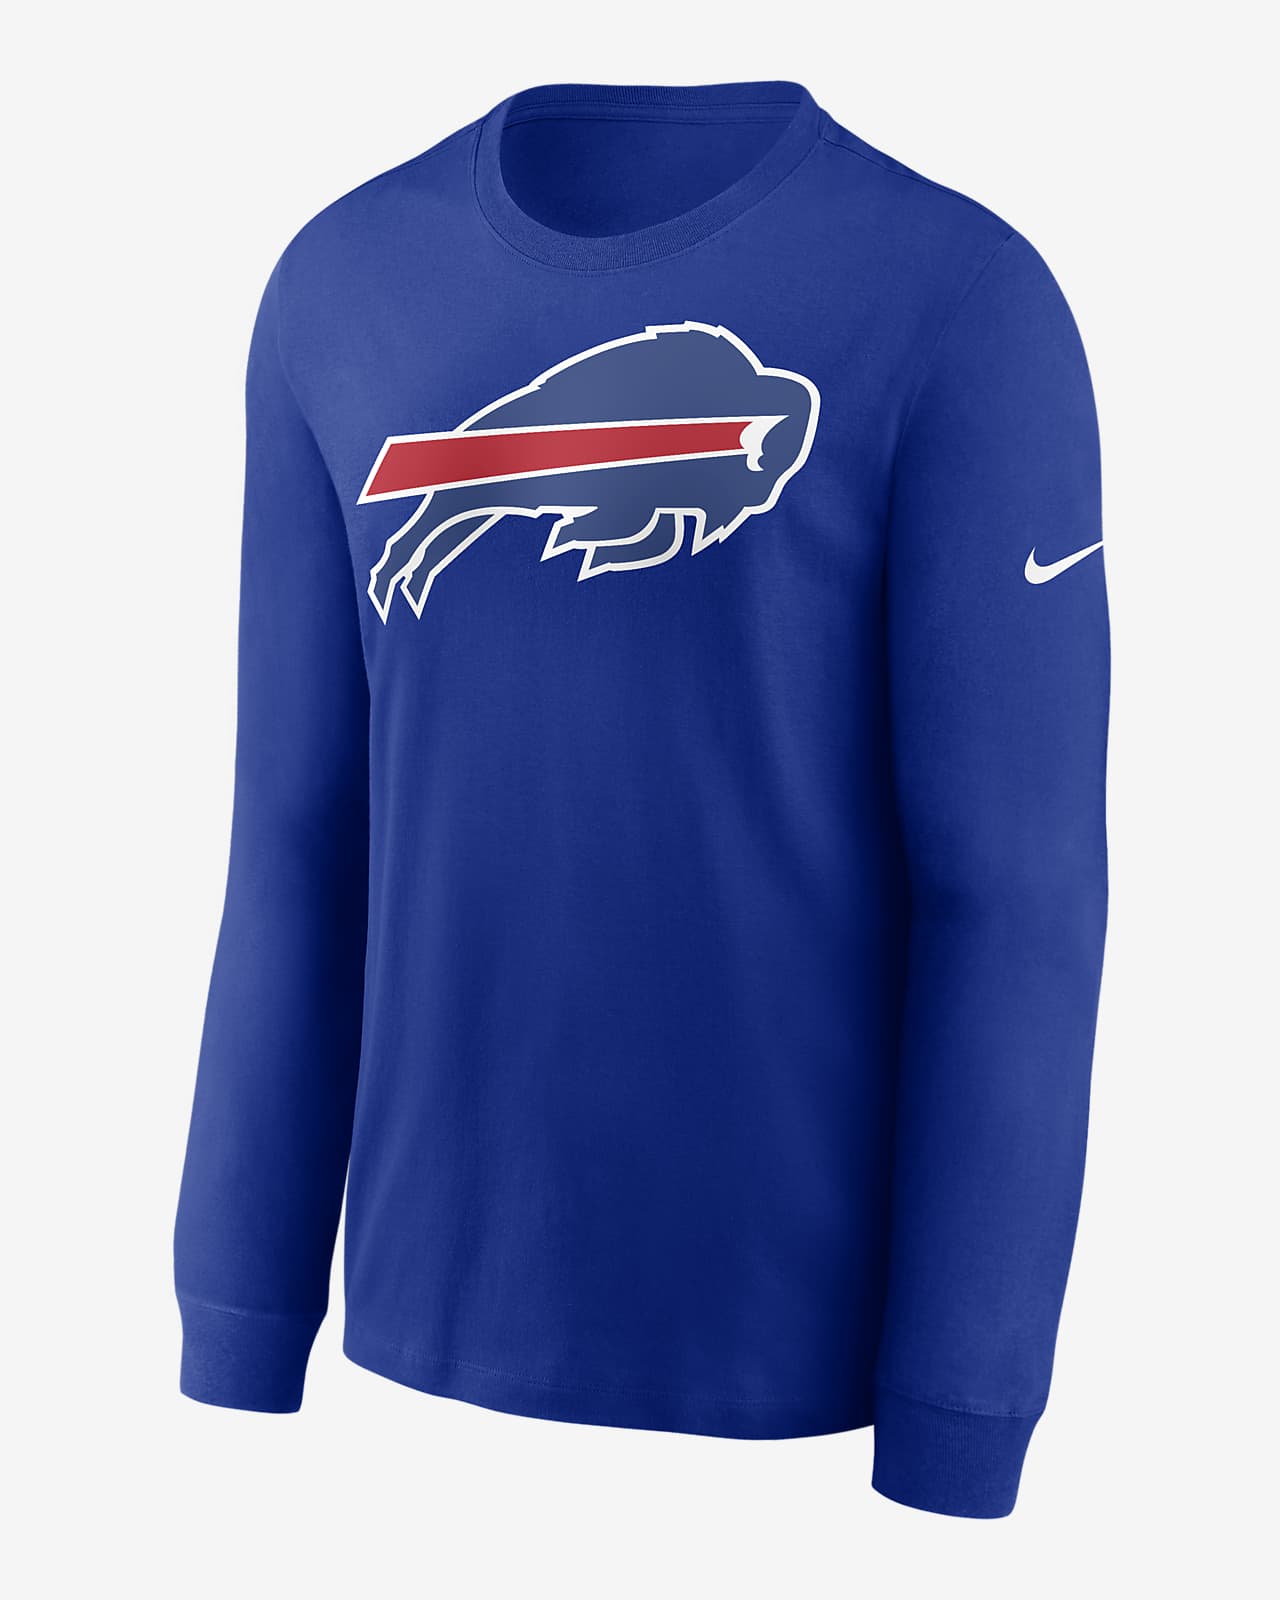 Buffalo Bills Local Essential Men's Nike NFL T-Shirt